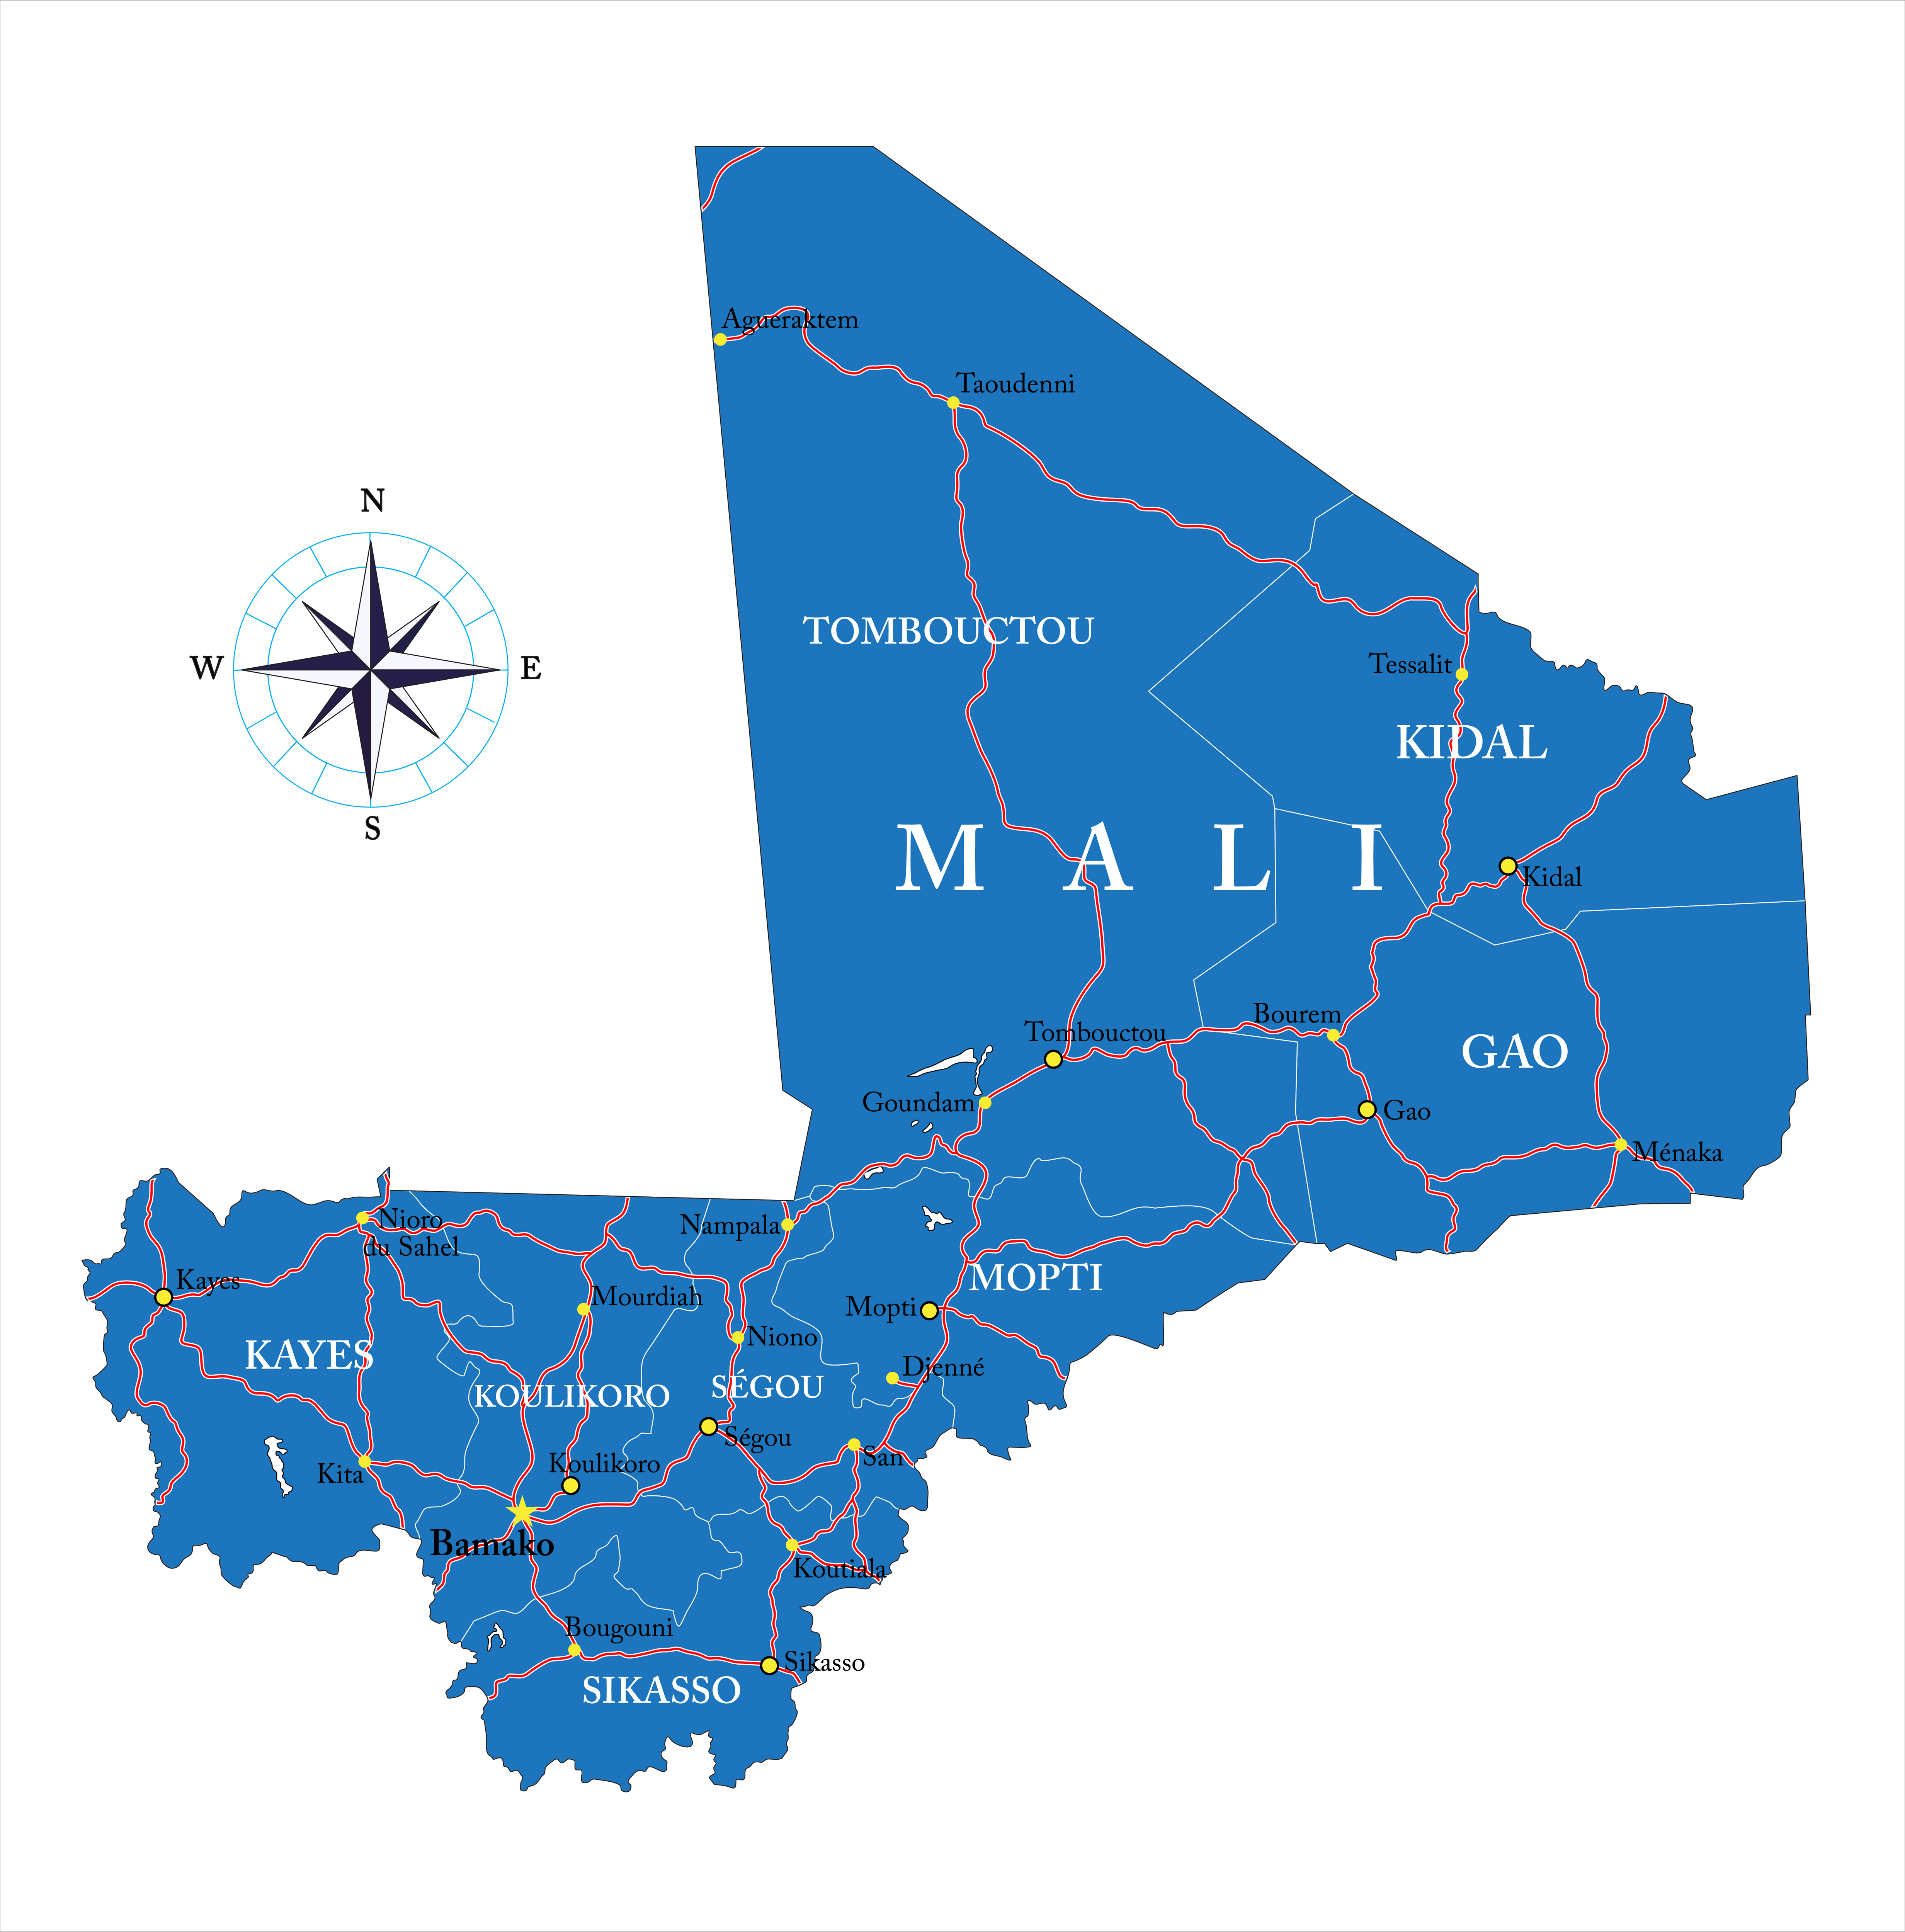 Map of Mali. Image courtesy of DollarPhotoClub.com